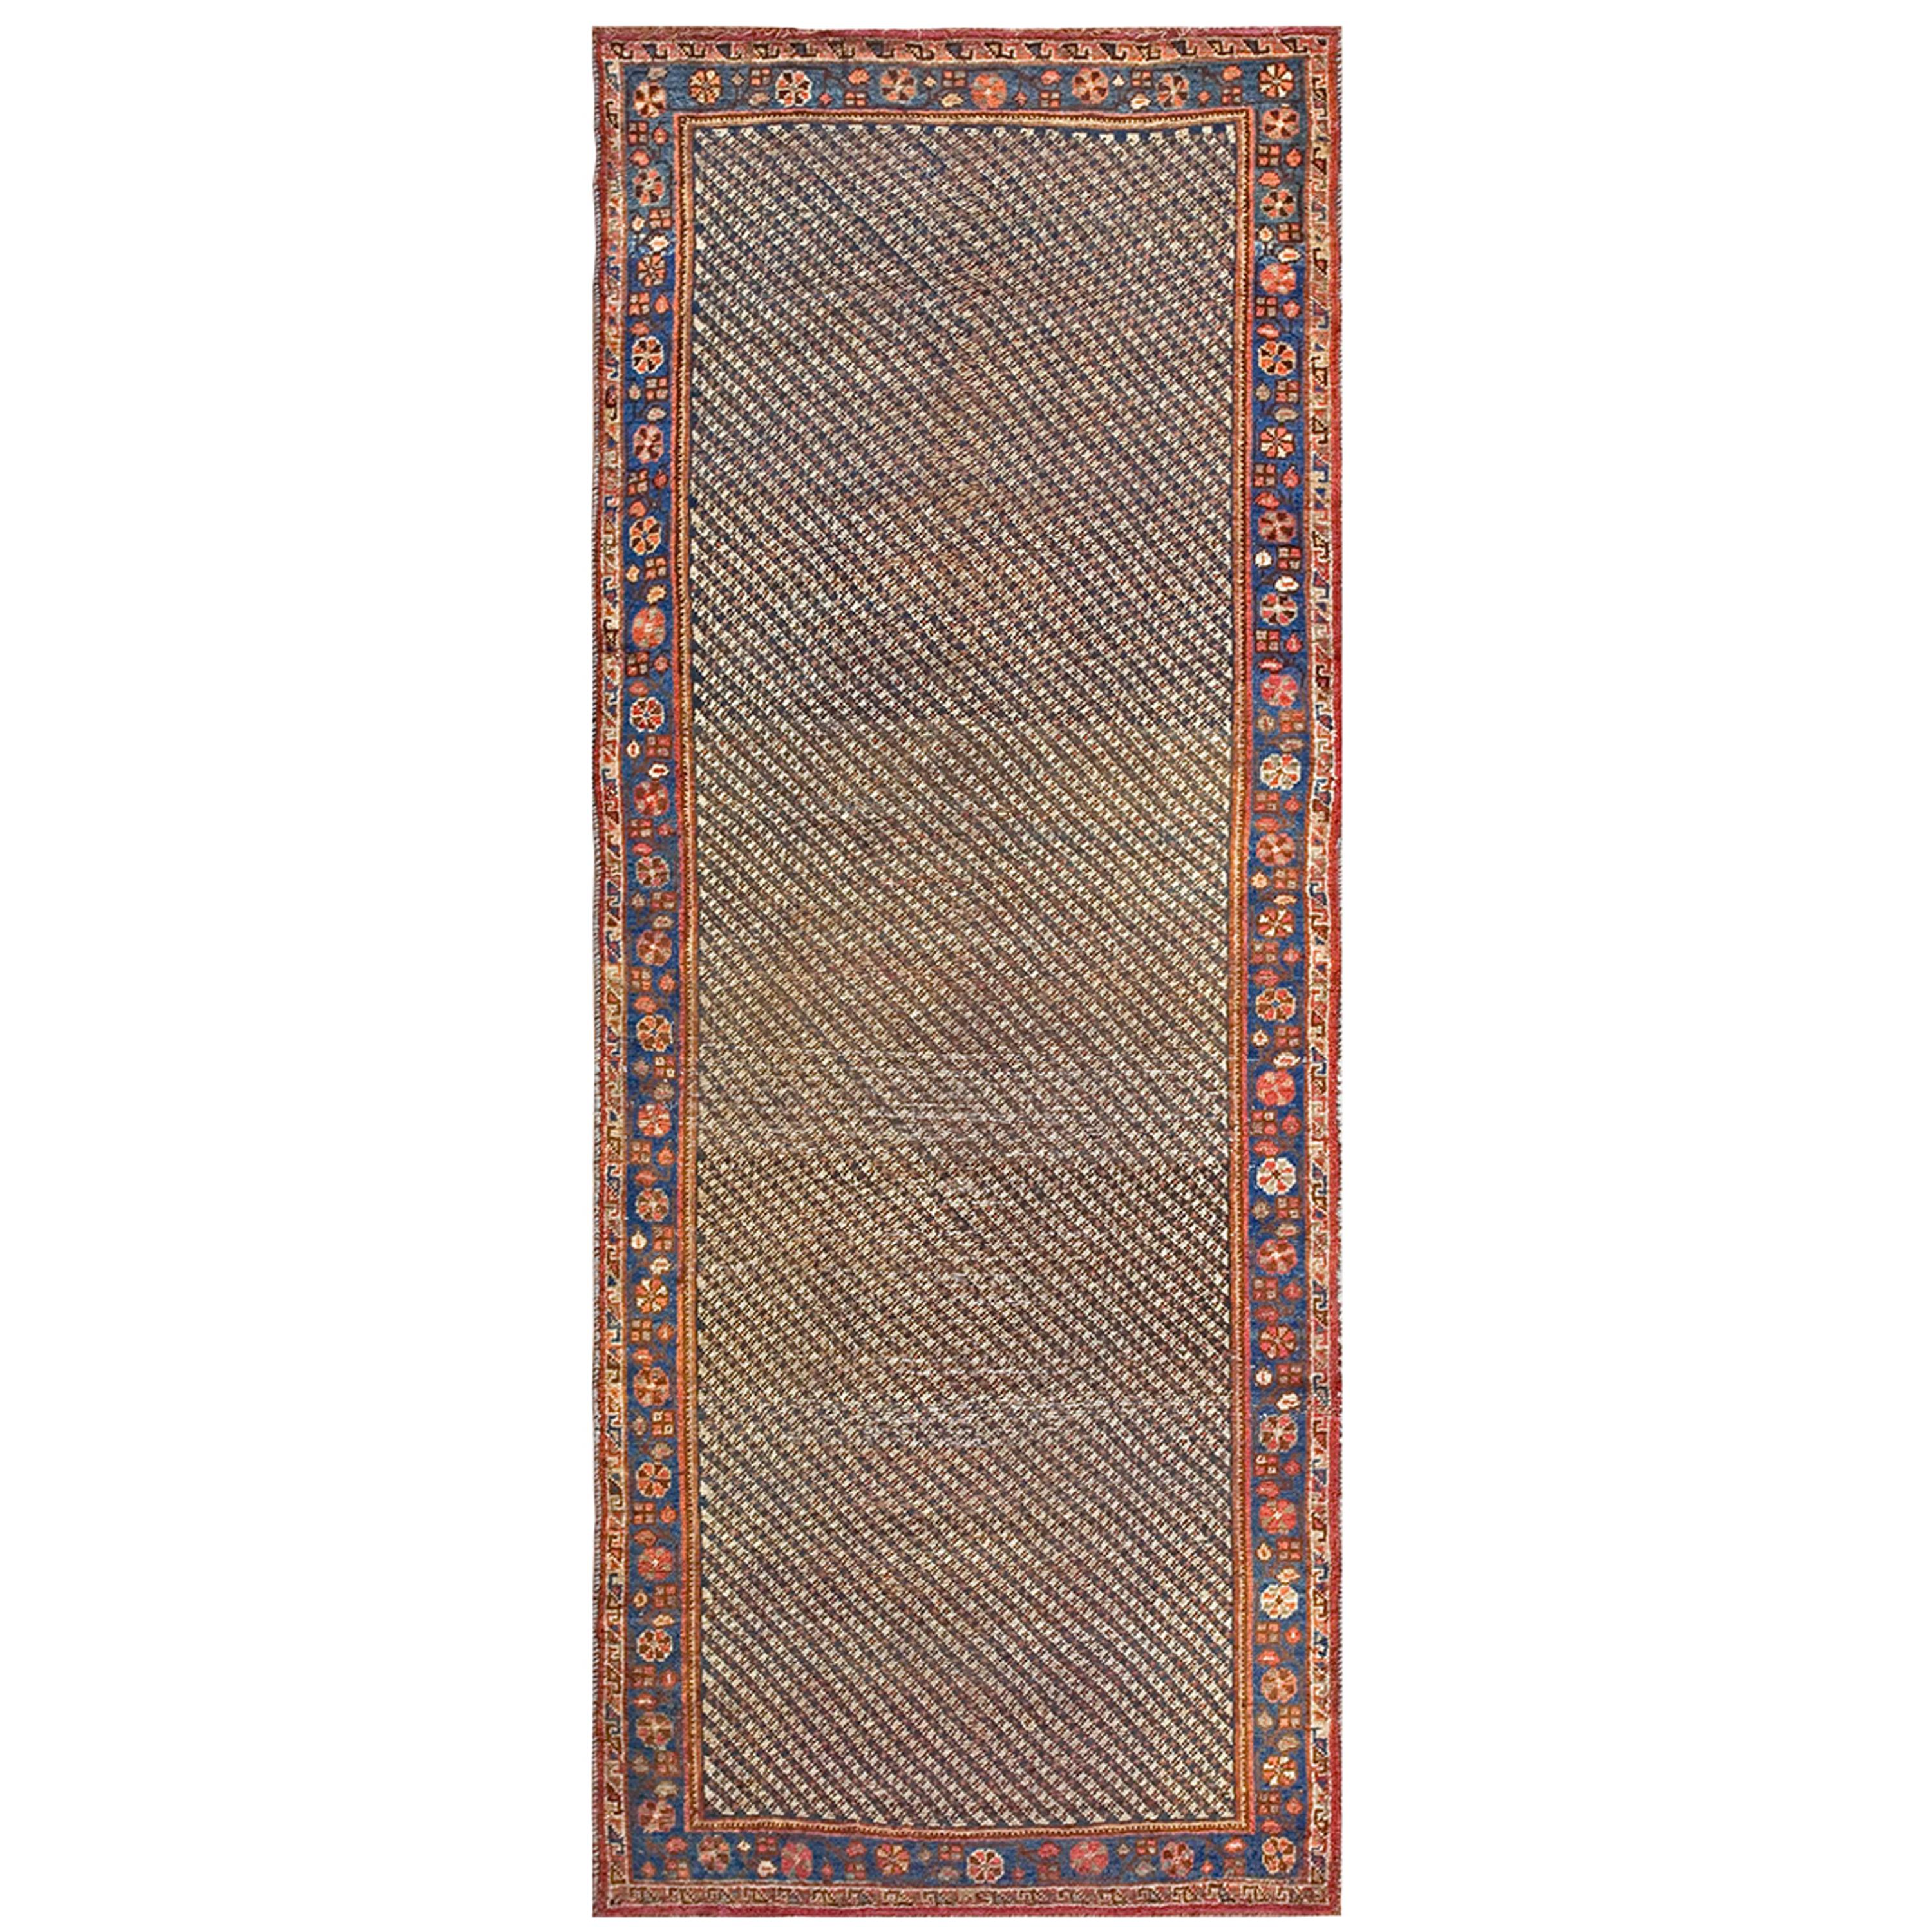 Early 20th Century S.E. Persian Afshar Carpet ( 3'6" x 9' - 106 x 275 )